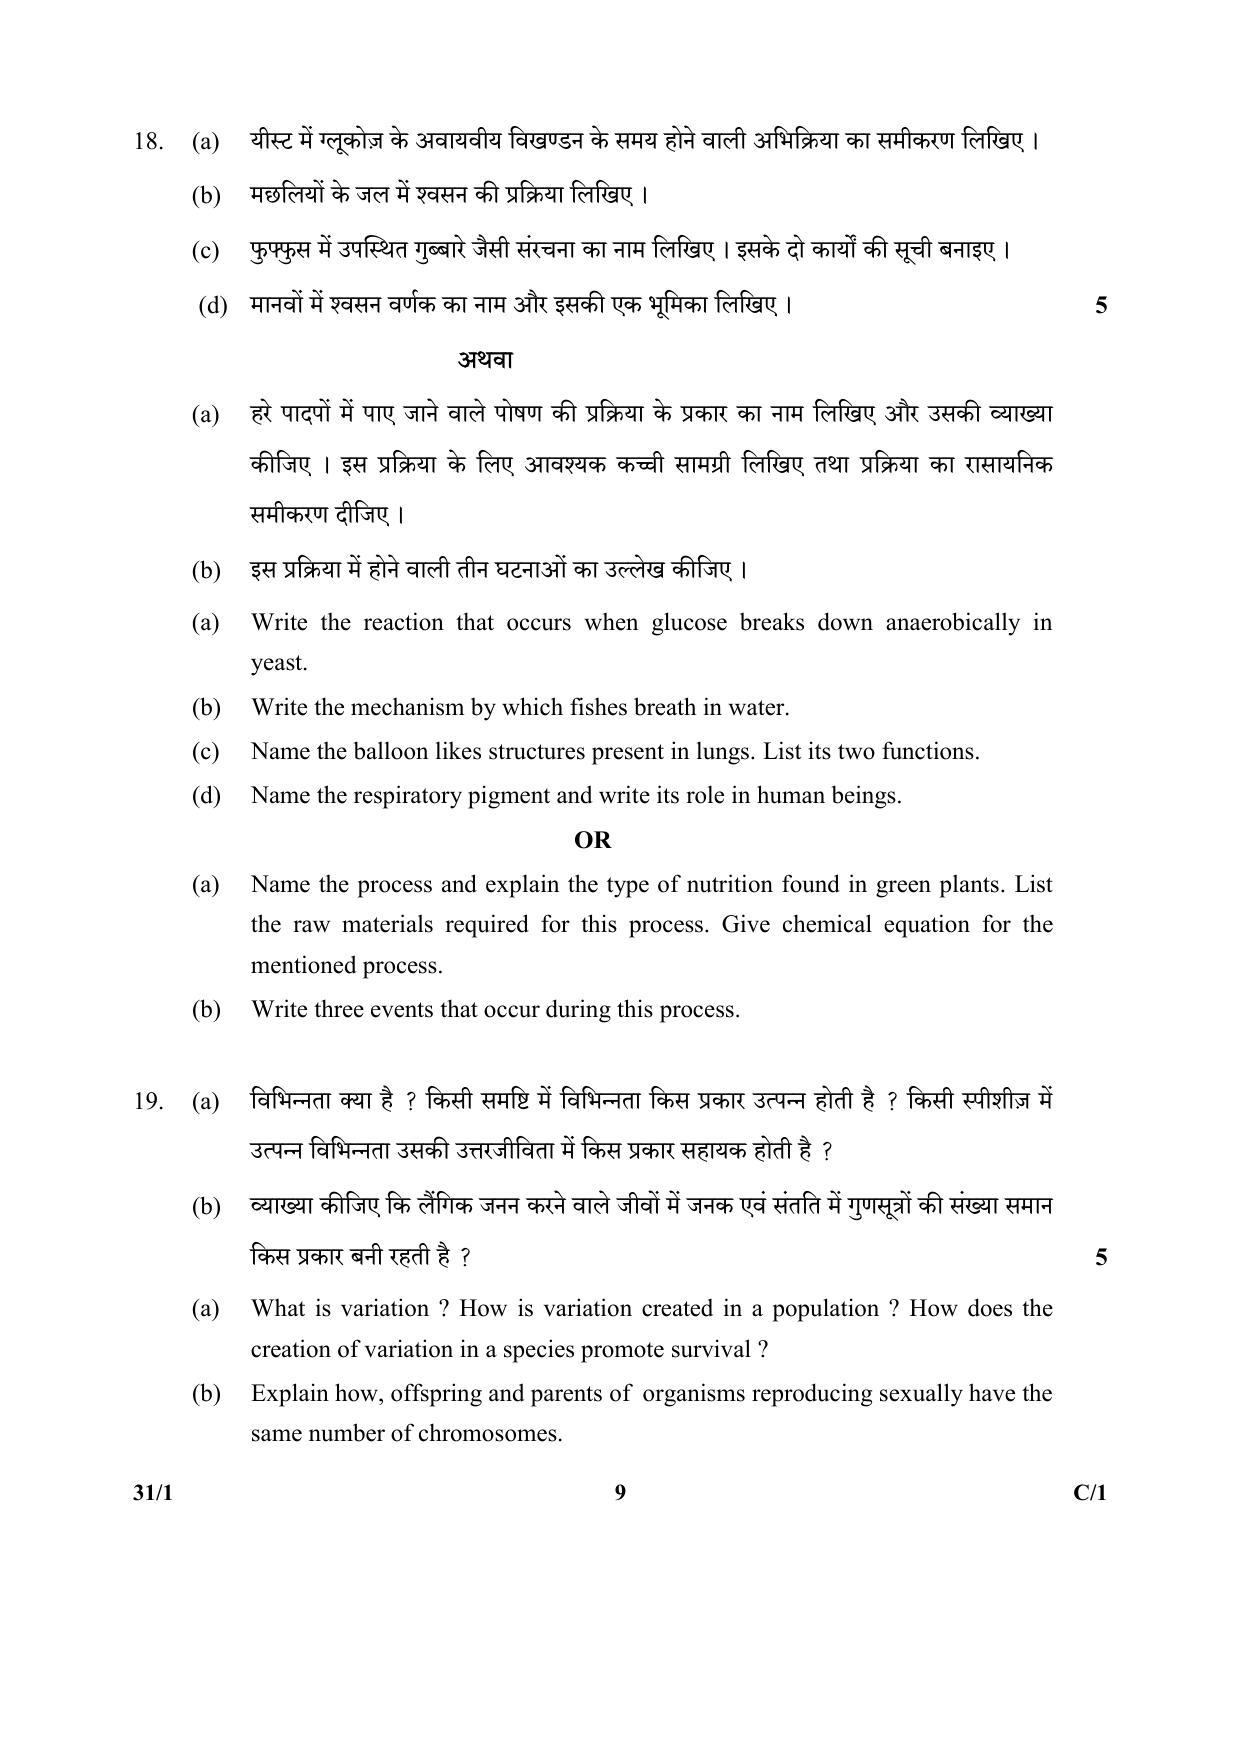 CBSE Class 10 41-1 Science PUNJABI VERSION 2018 Compartment Question Paper - Page 17